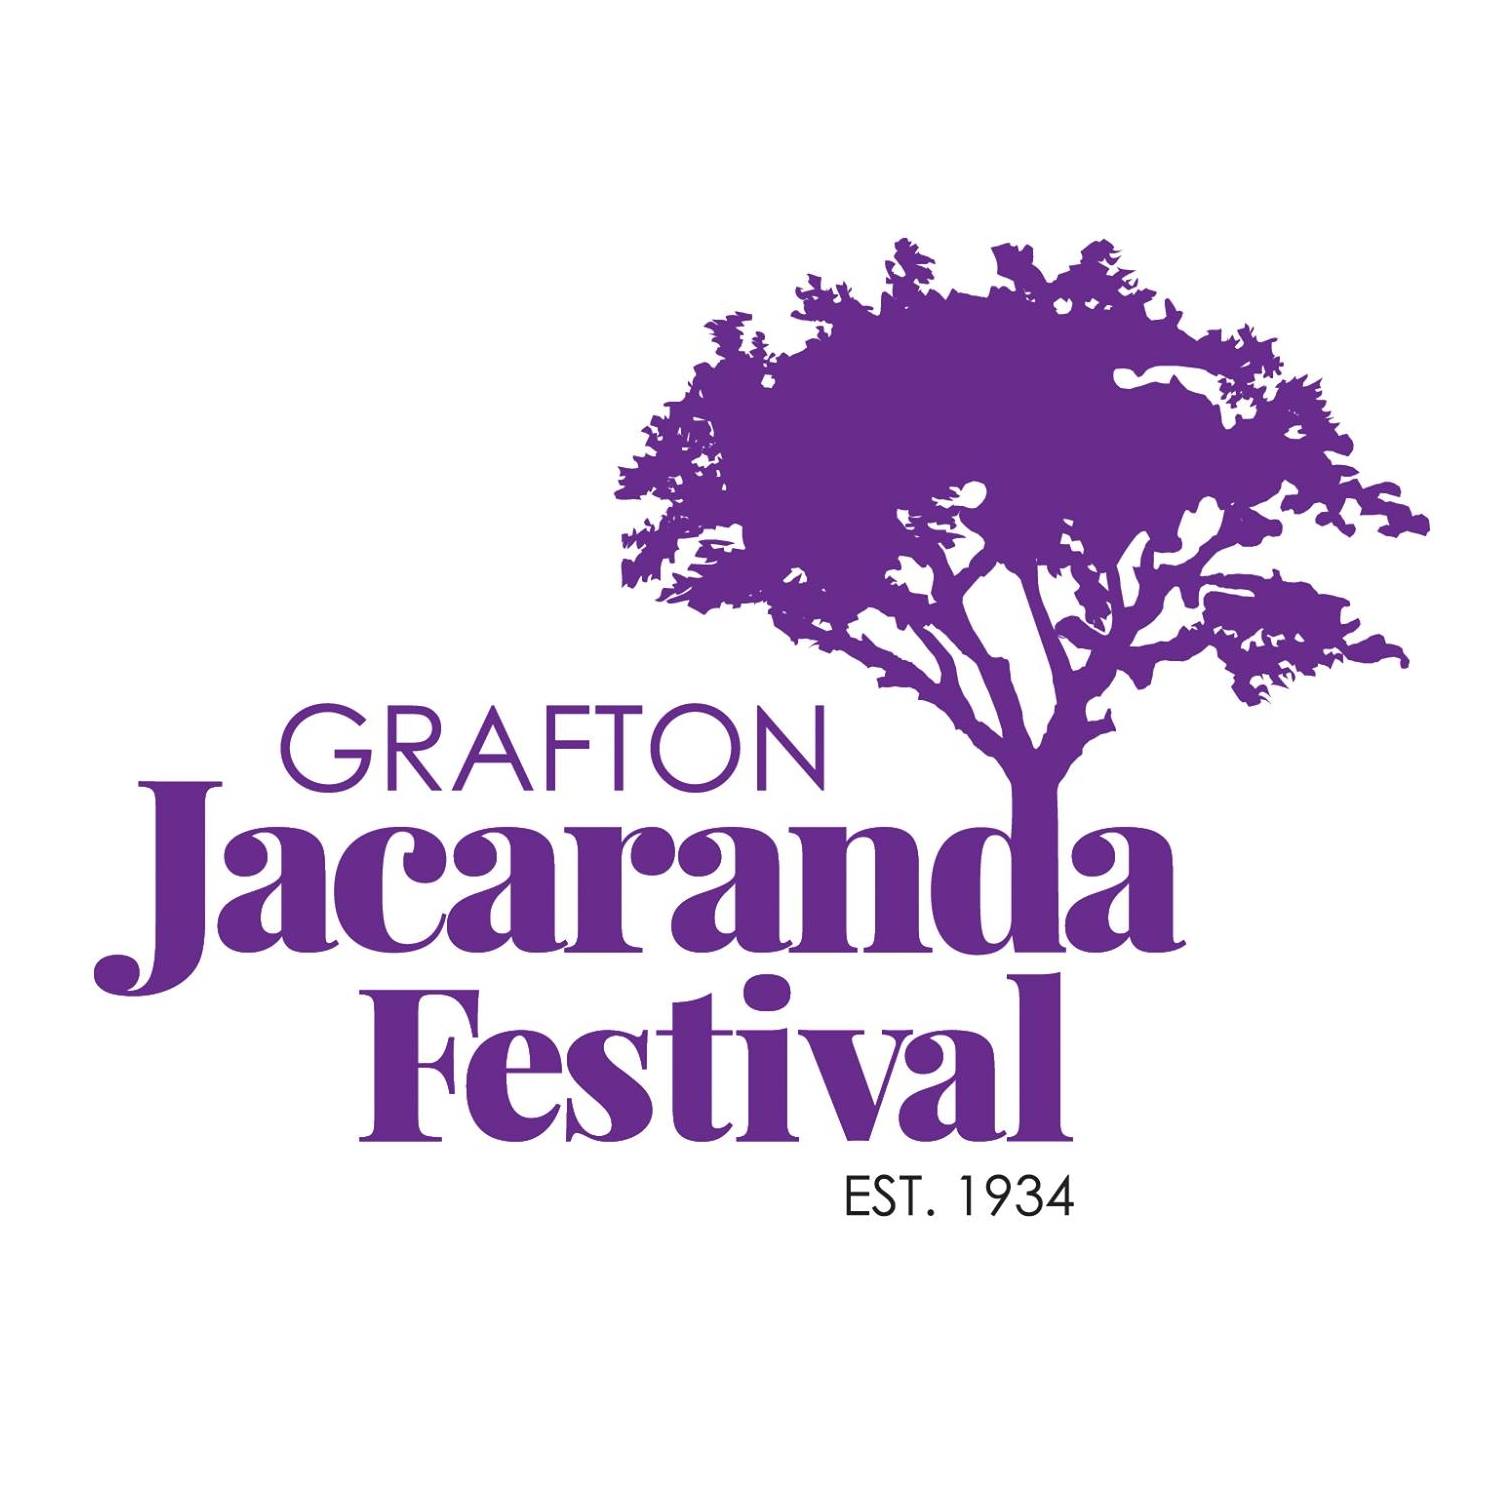 Grafton Jacaranda Festival